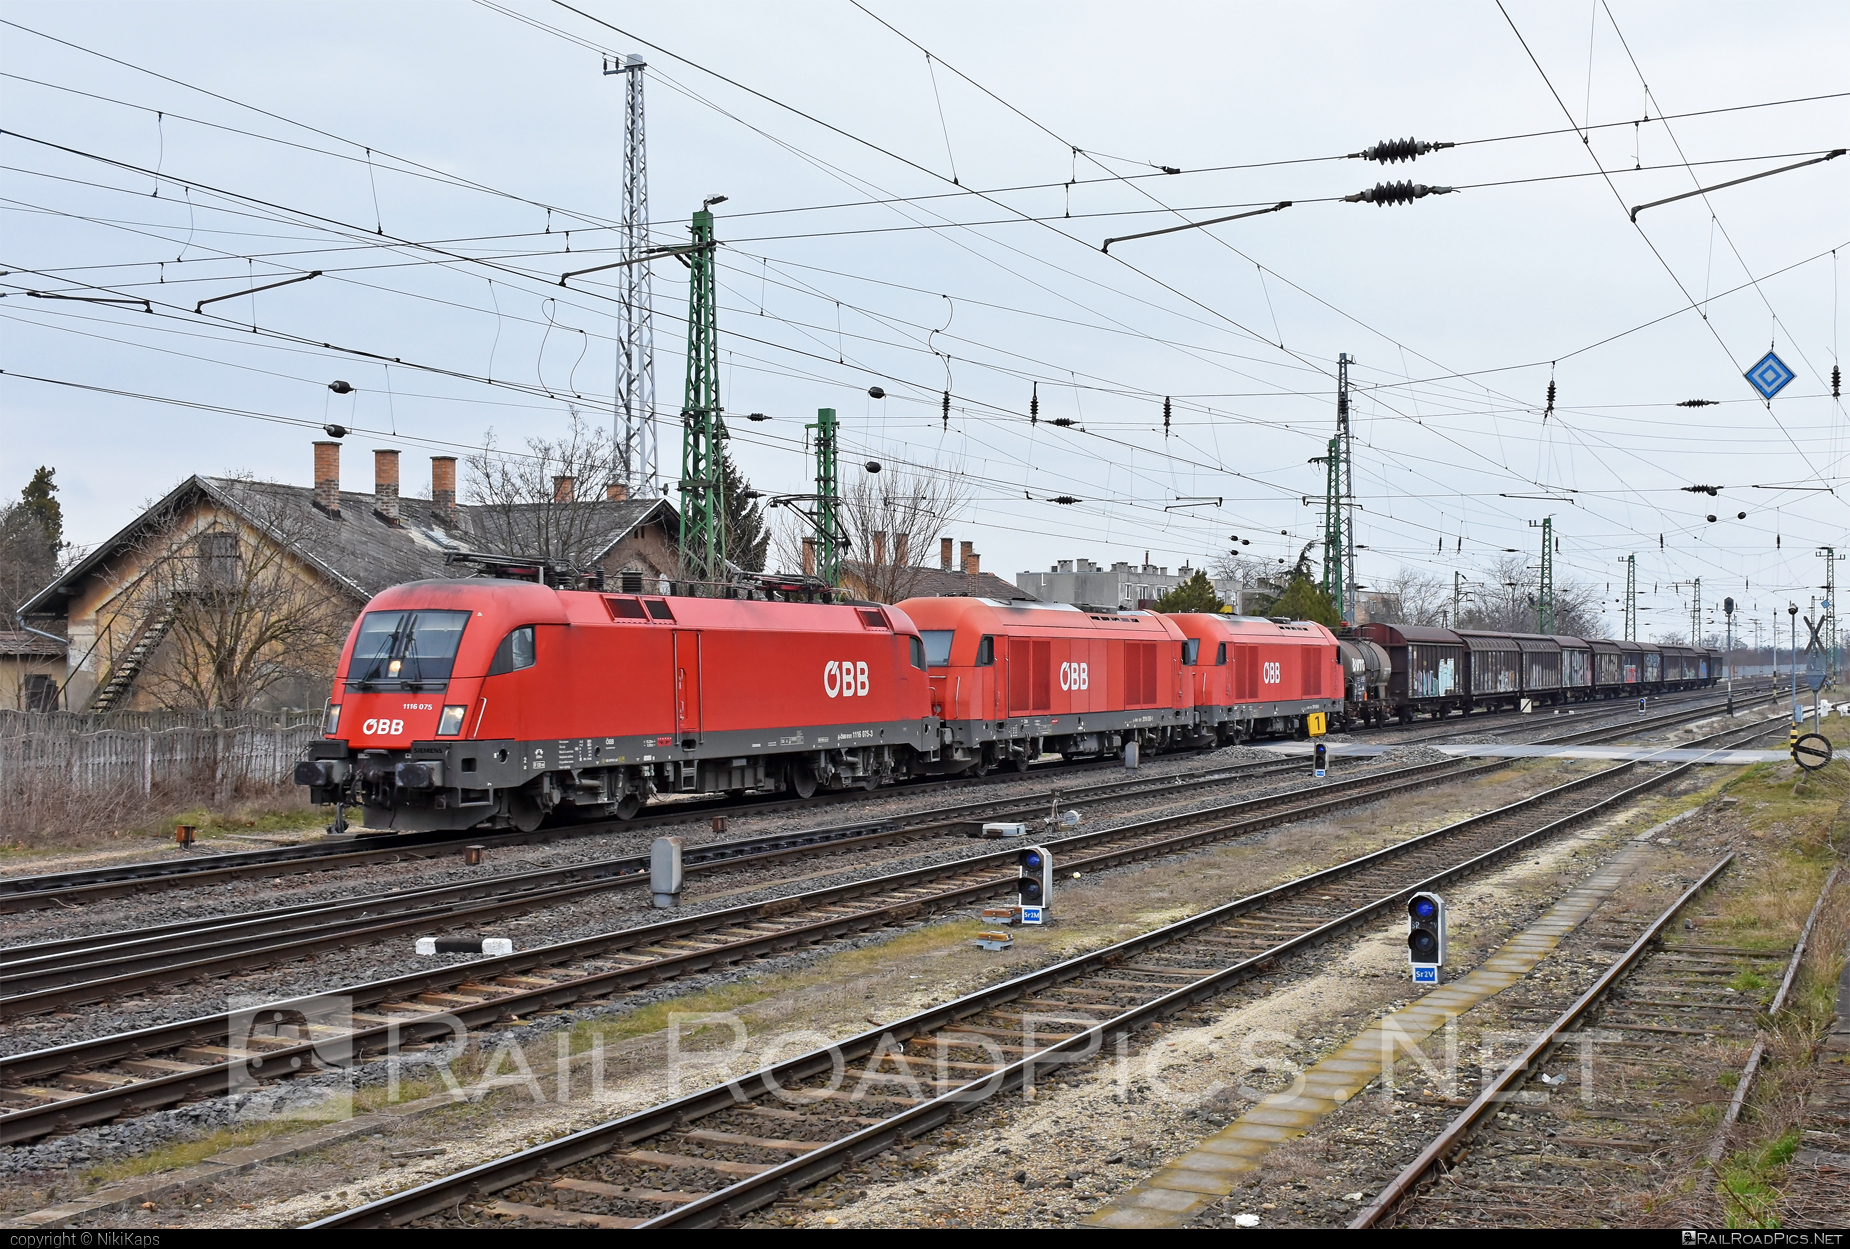 Siemens ES 64 U2 - 1116 075 operated by Rail Cargo Austria AG #es64 #es64u2 #eurosprinter #hercules #obb #osterreichischebundesbahnen #rcw #siemens #siemensEs64 #siemensEs64u2 #siemenstaurus #taurus #tauruslocomotive